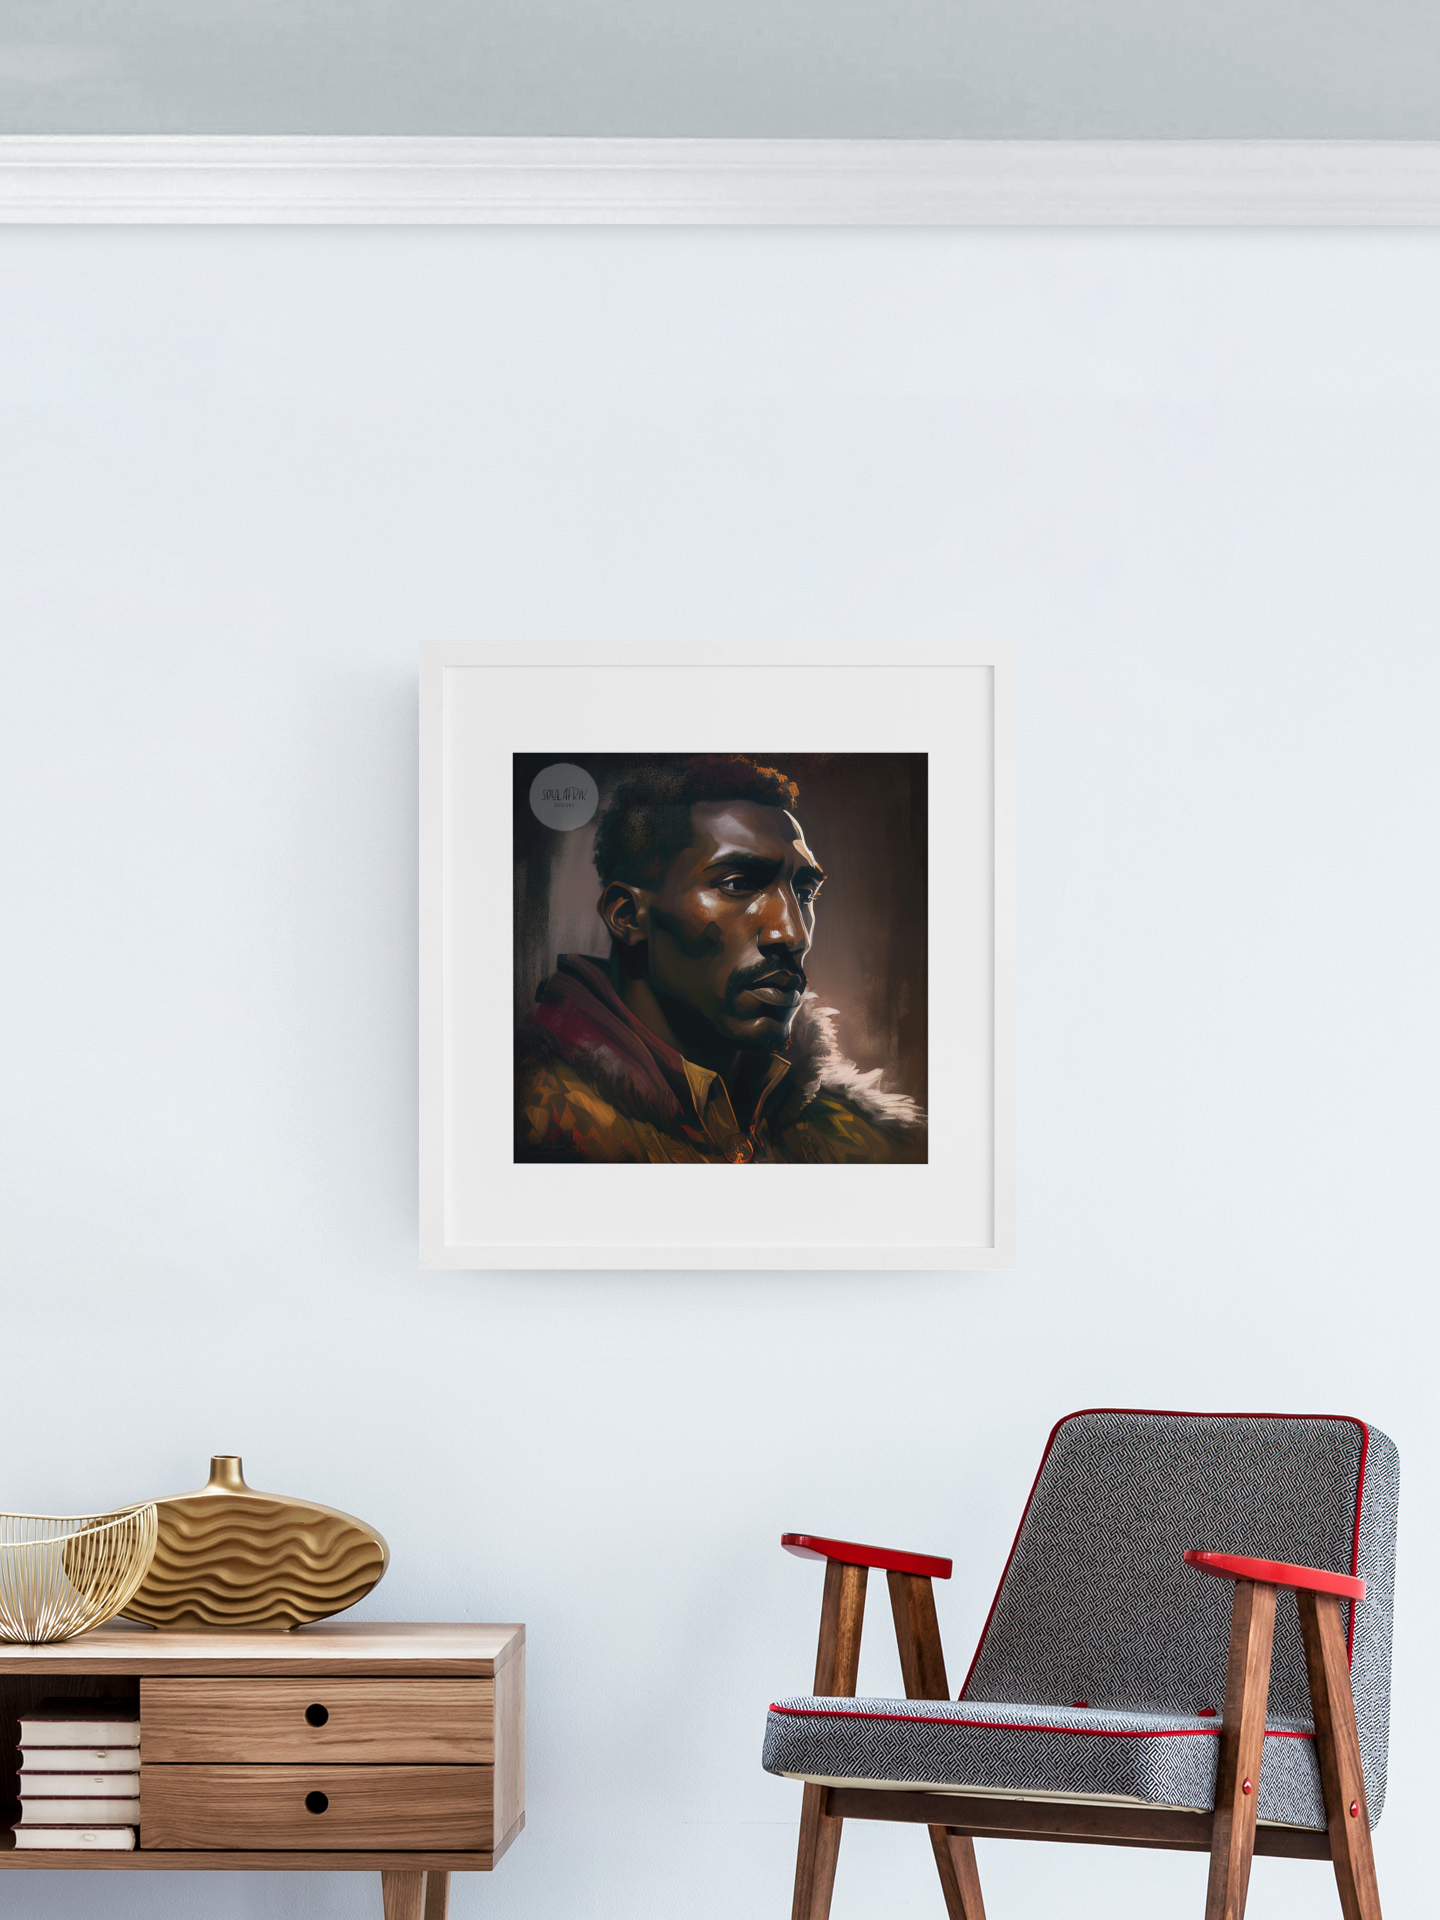 Society: Thomas Sankara portrait concept